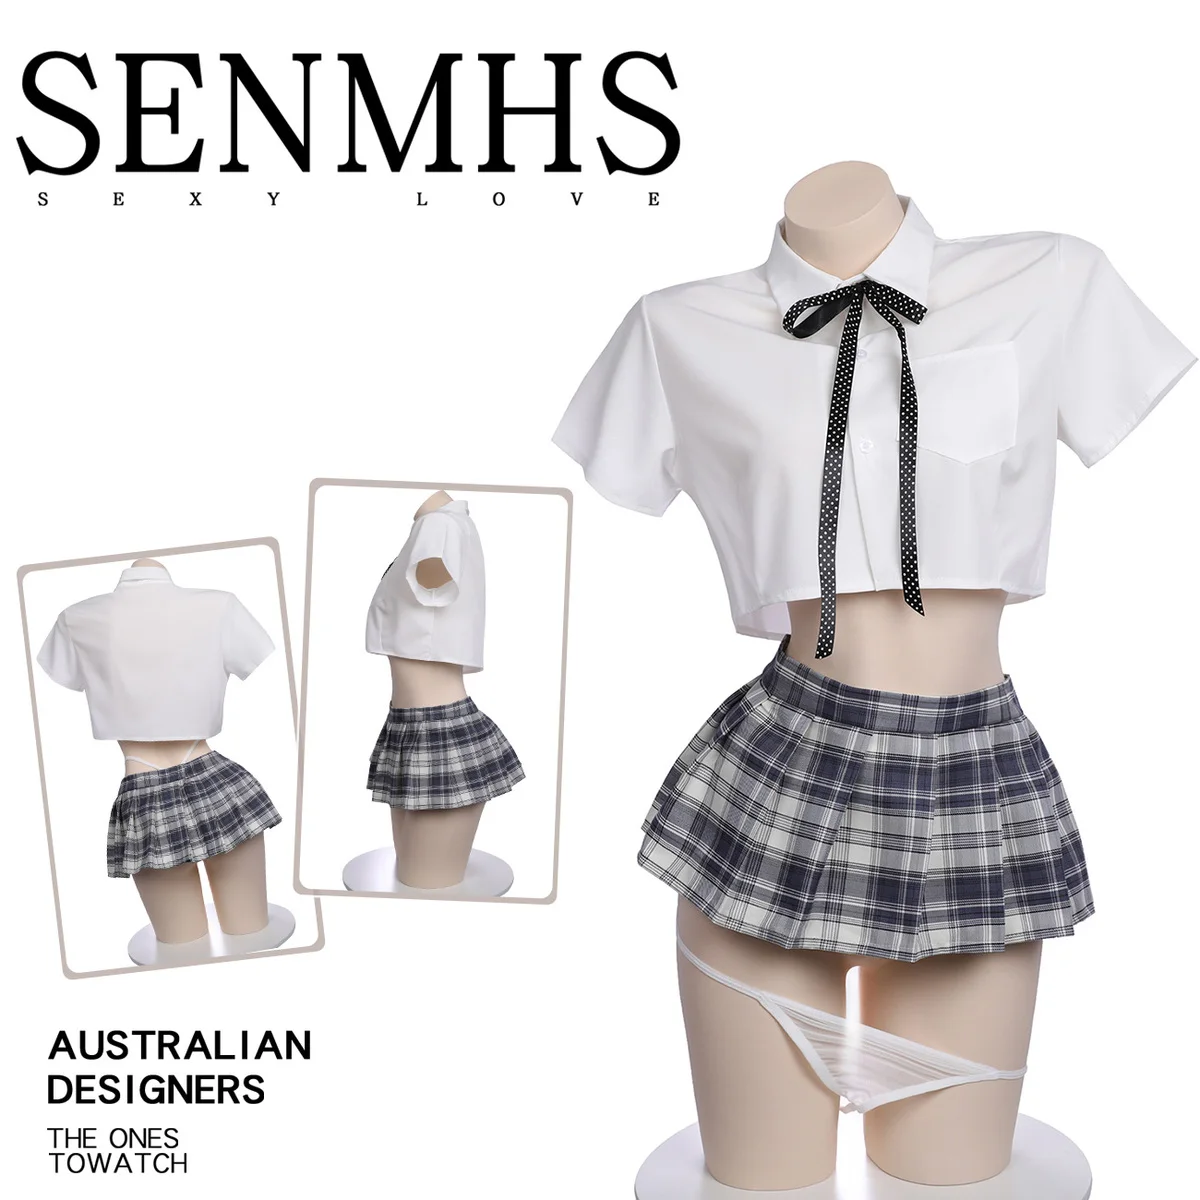 senmhs sexy schoolgirl cosplay costumes with